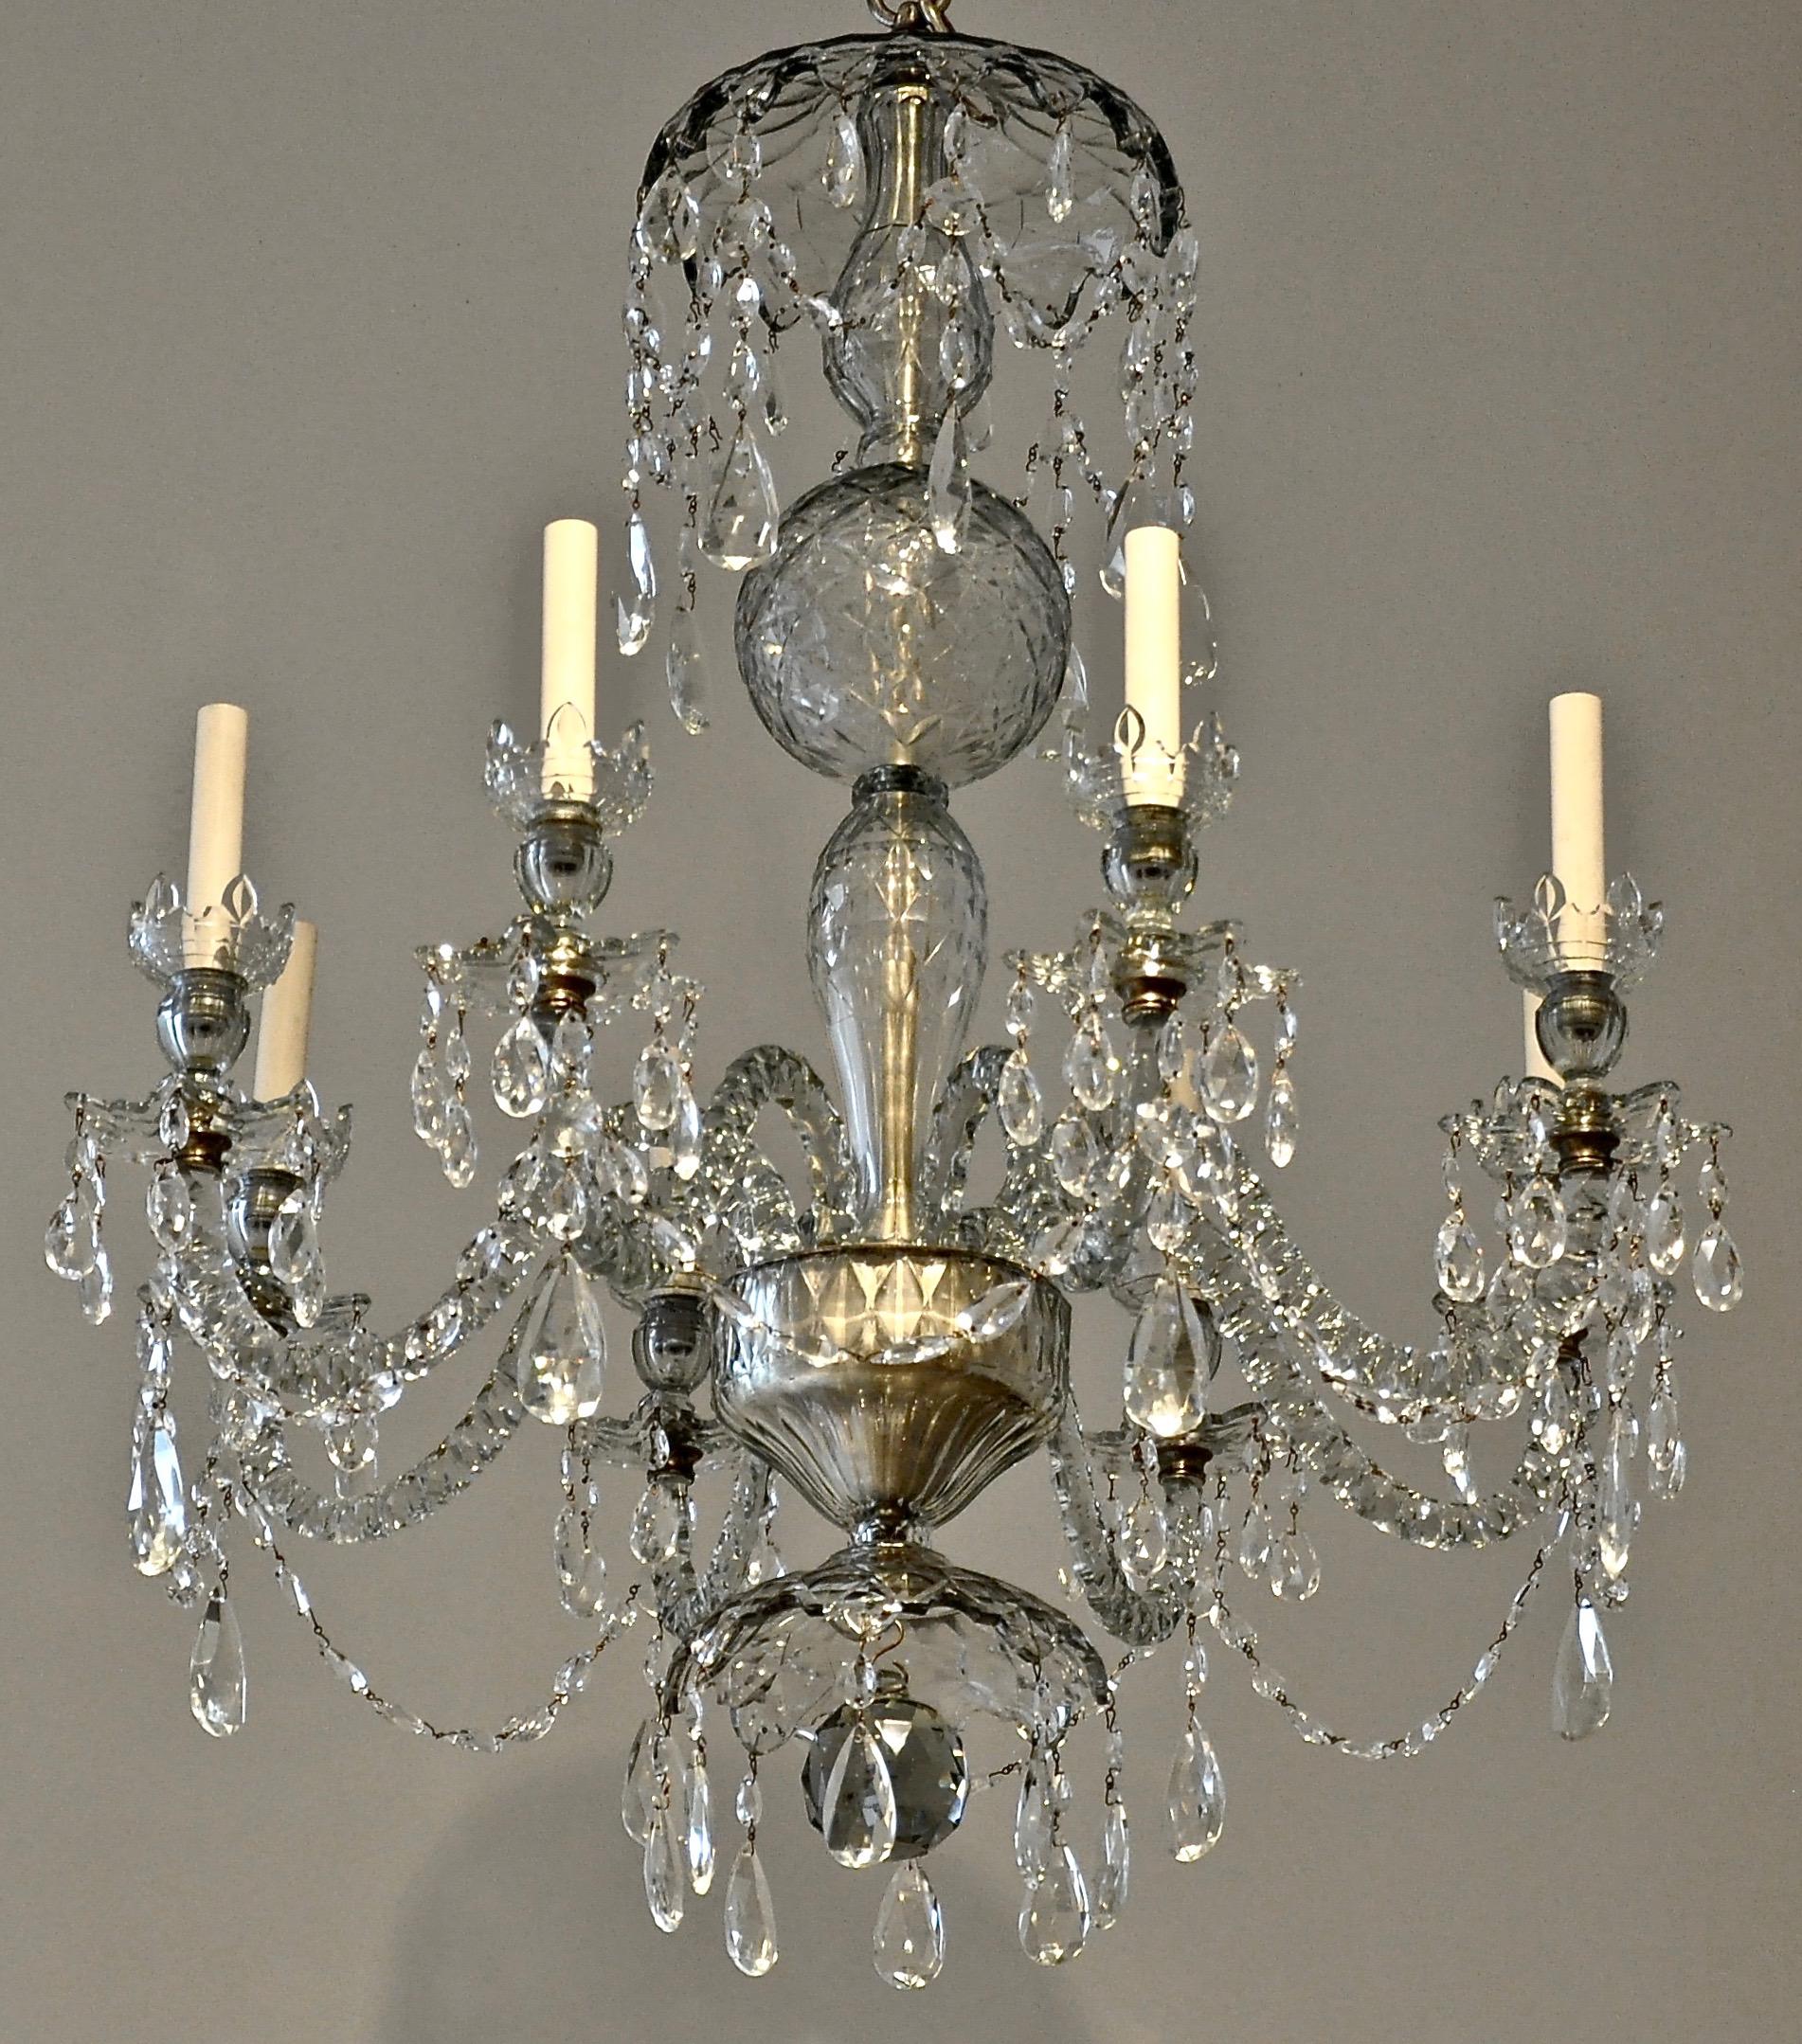 Hand-Crafted Mid- 19th Century Irish Crystal Eight-Light Chandelier in Georgian Style